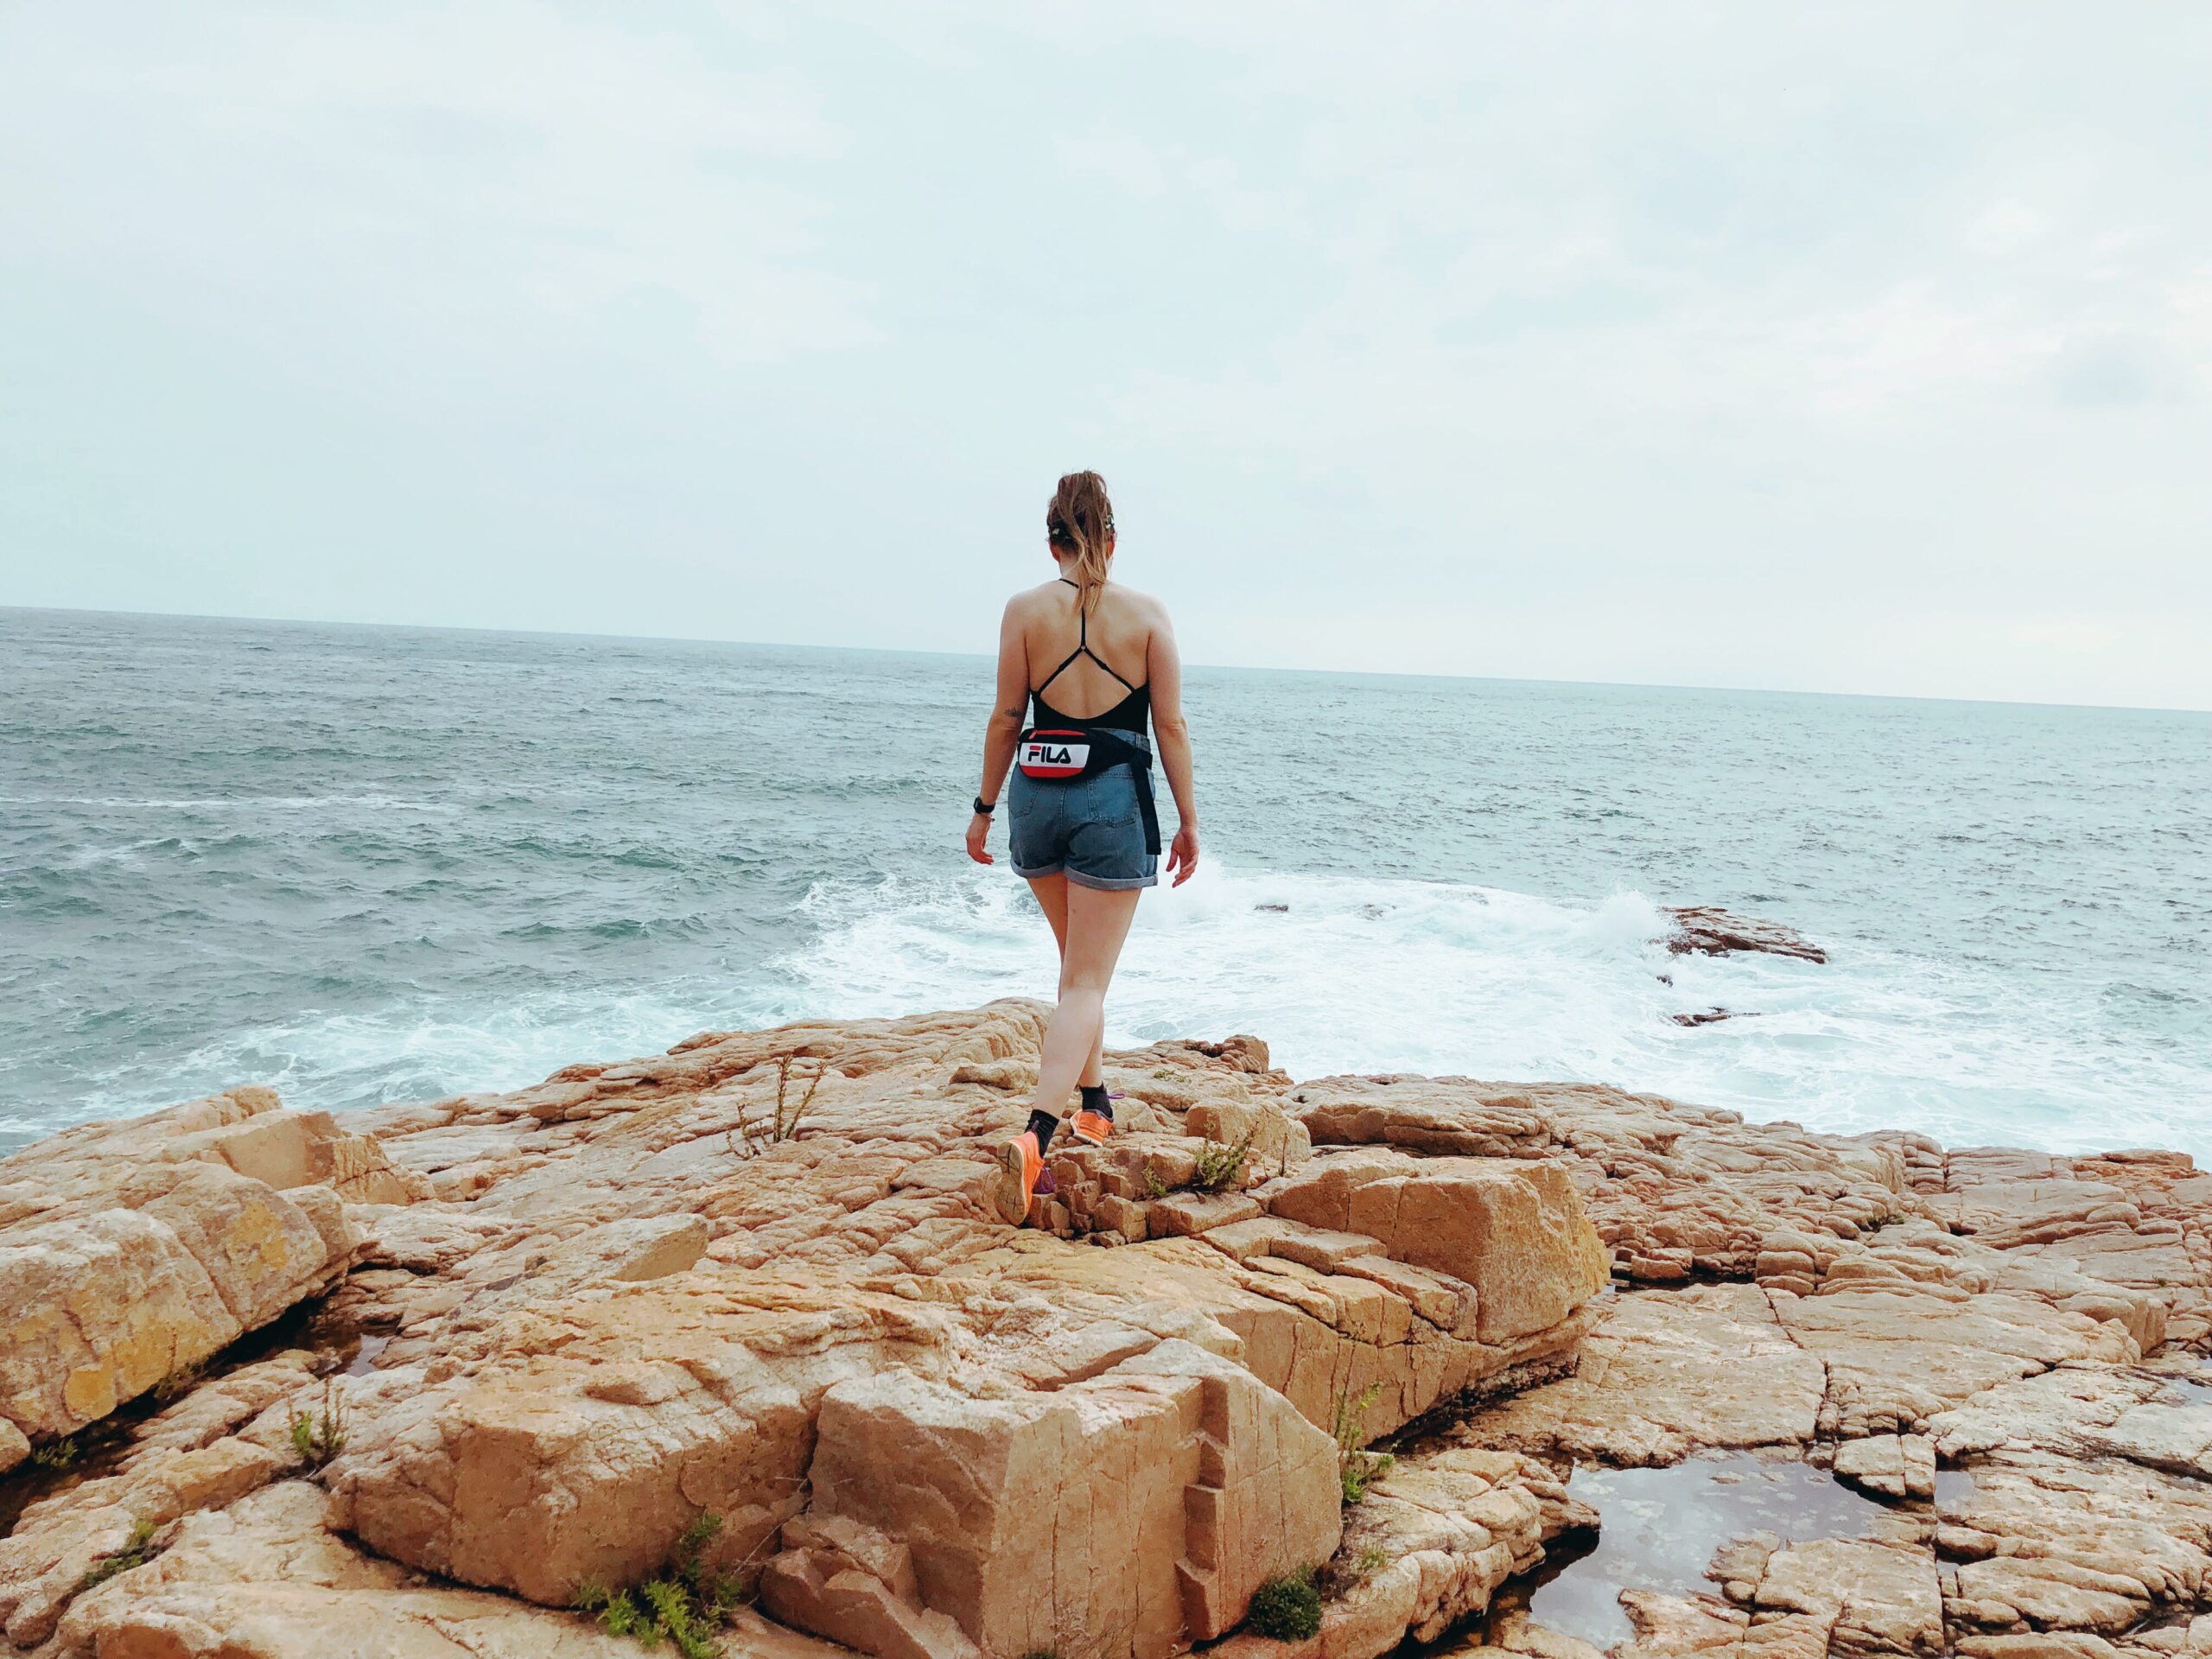 Sæunn of SajaRut Yoga walking on a cliff overlooking the ocean.